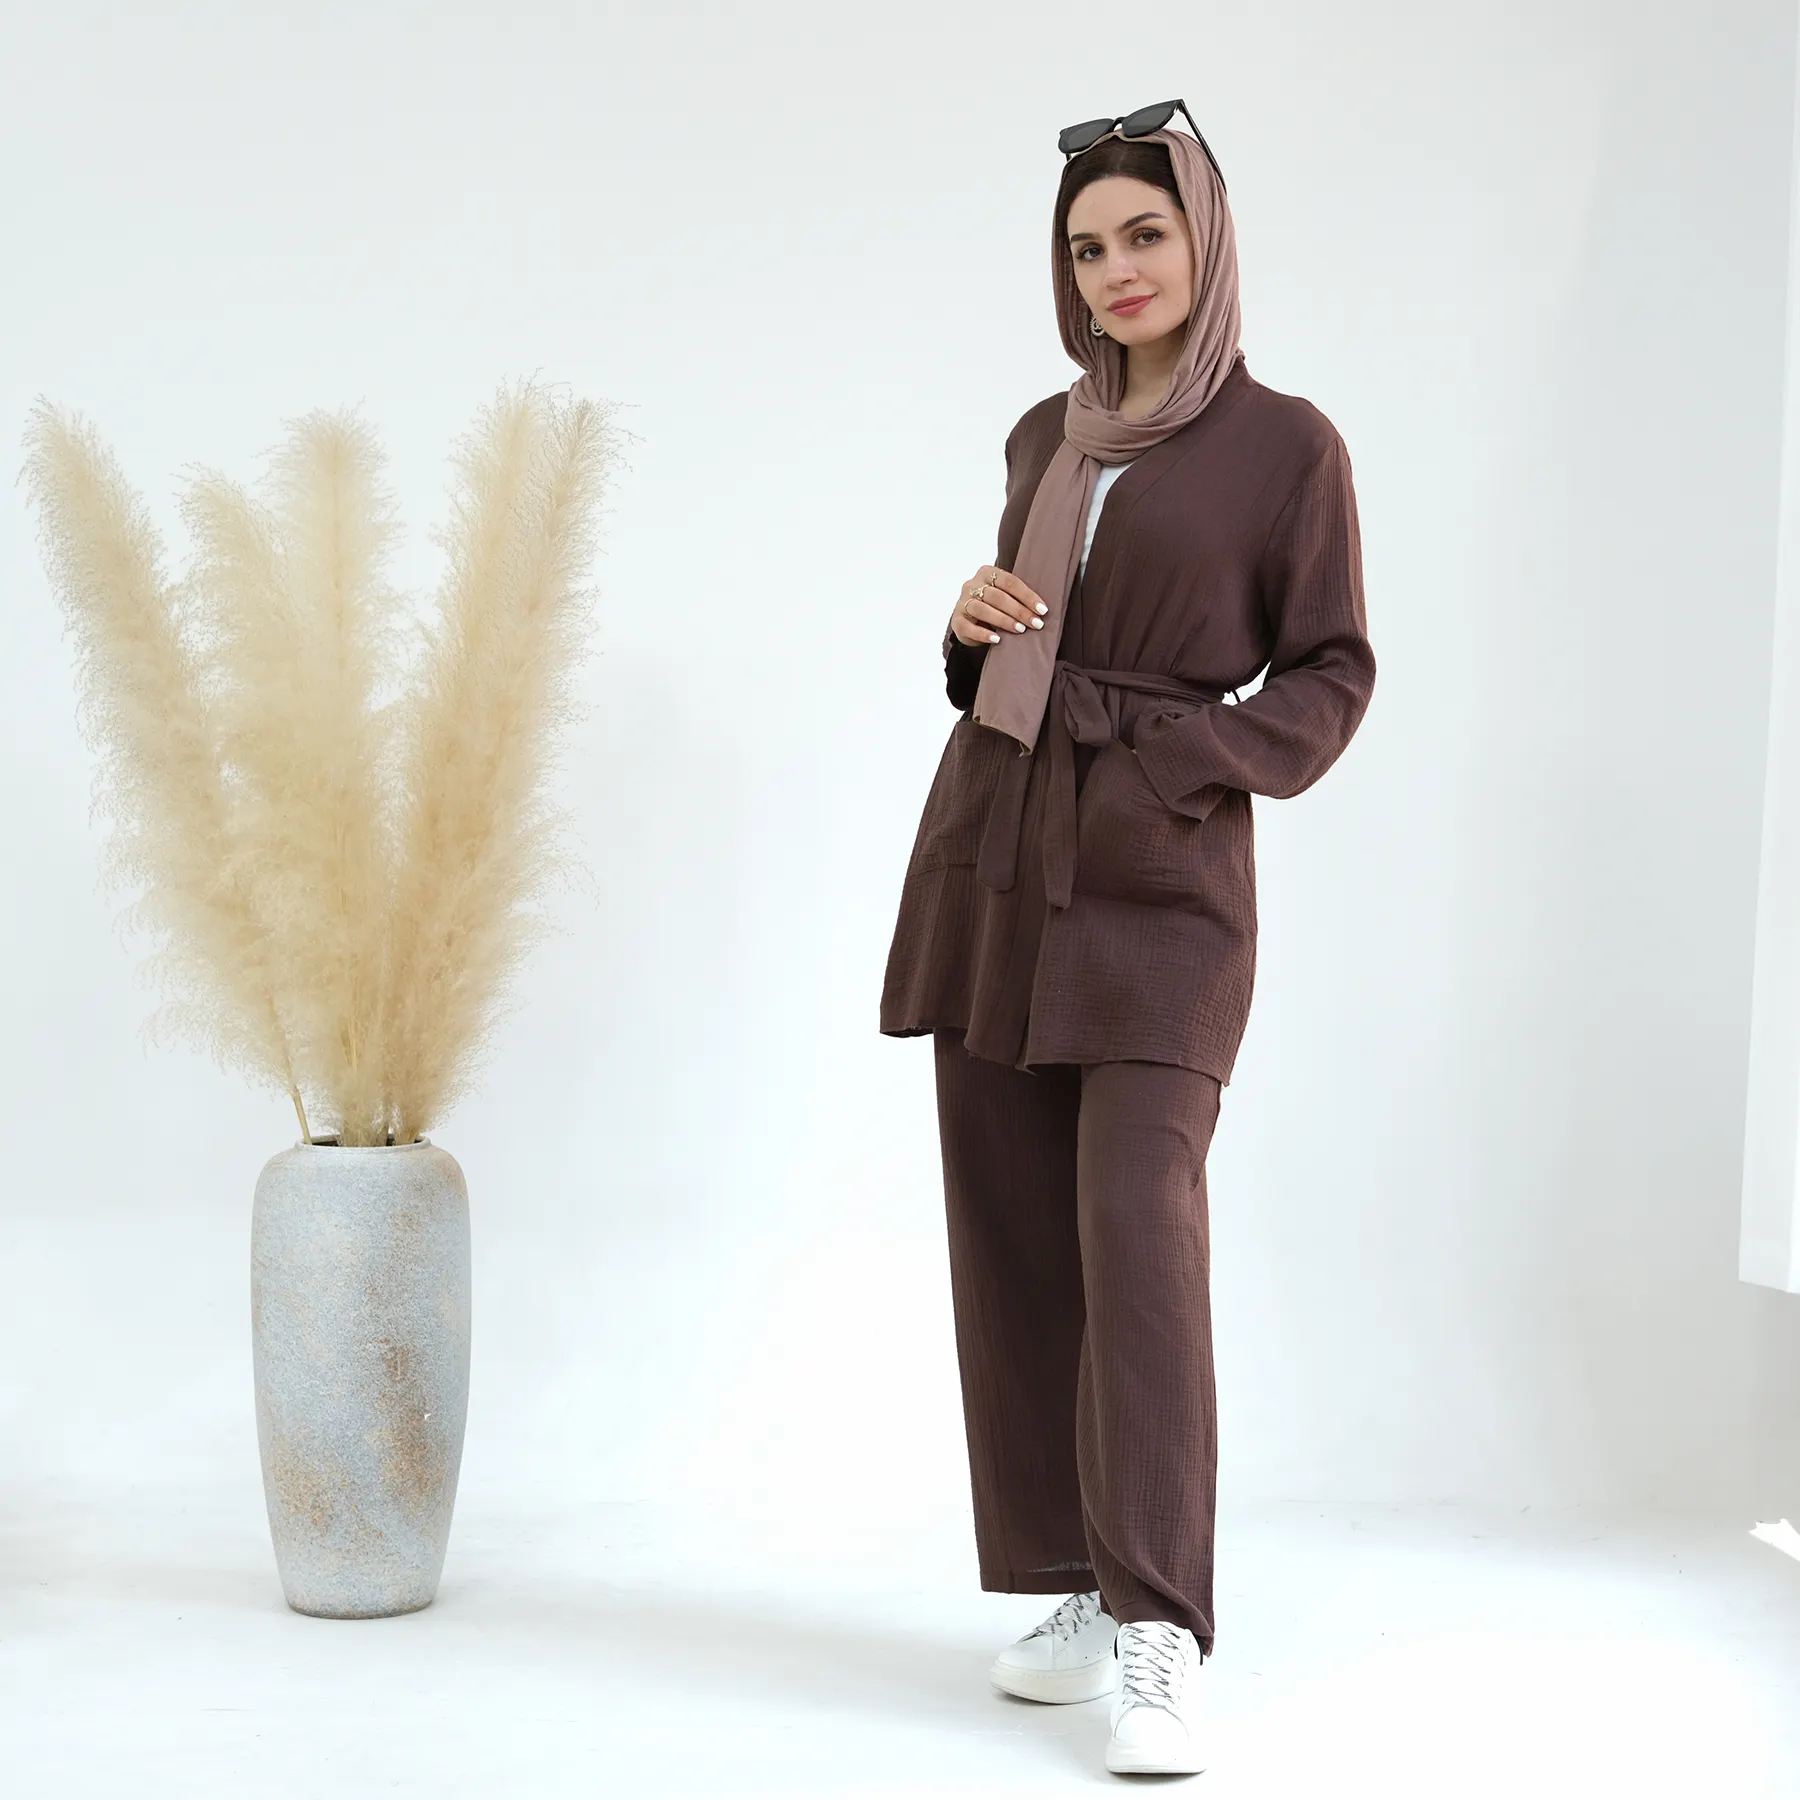 2023 Loriya Newest Fashion Cotton Long Sleeve Islamic Clothing Solid Color Top Shirt for Muslim Women